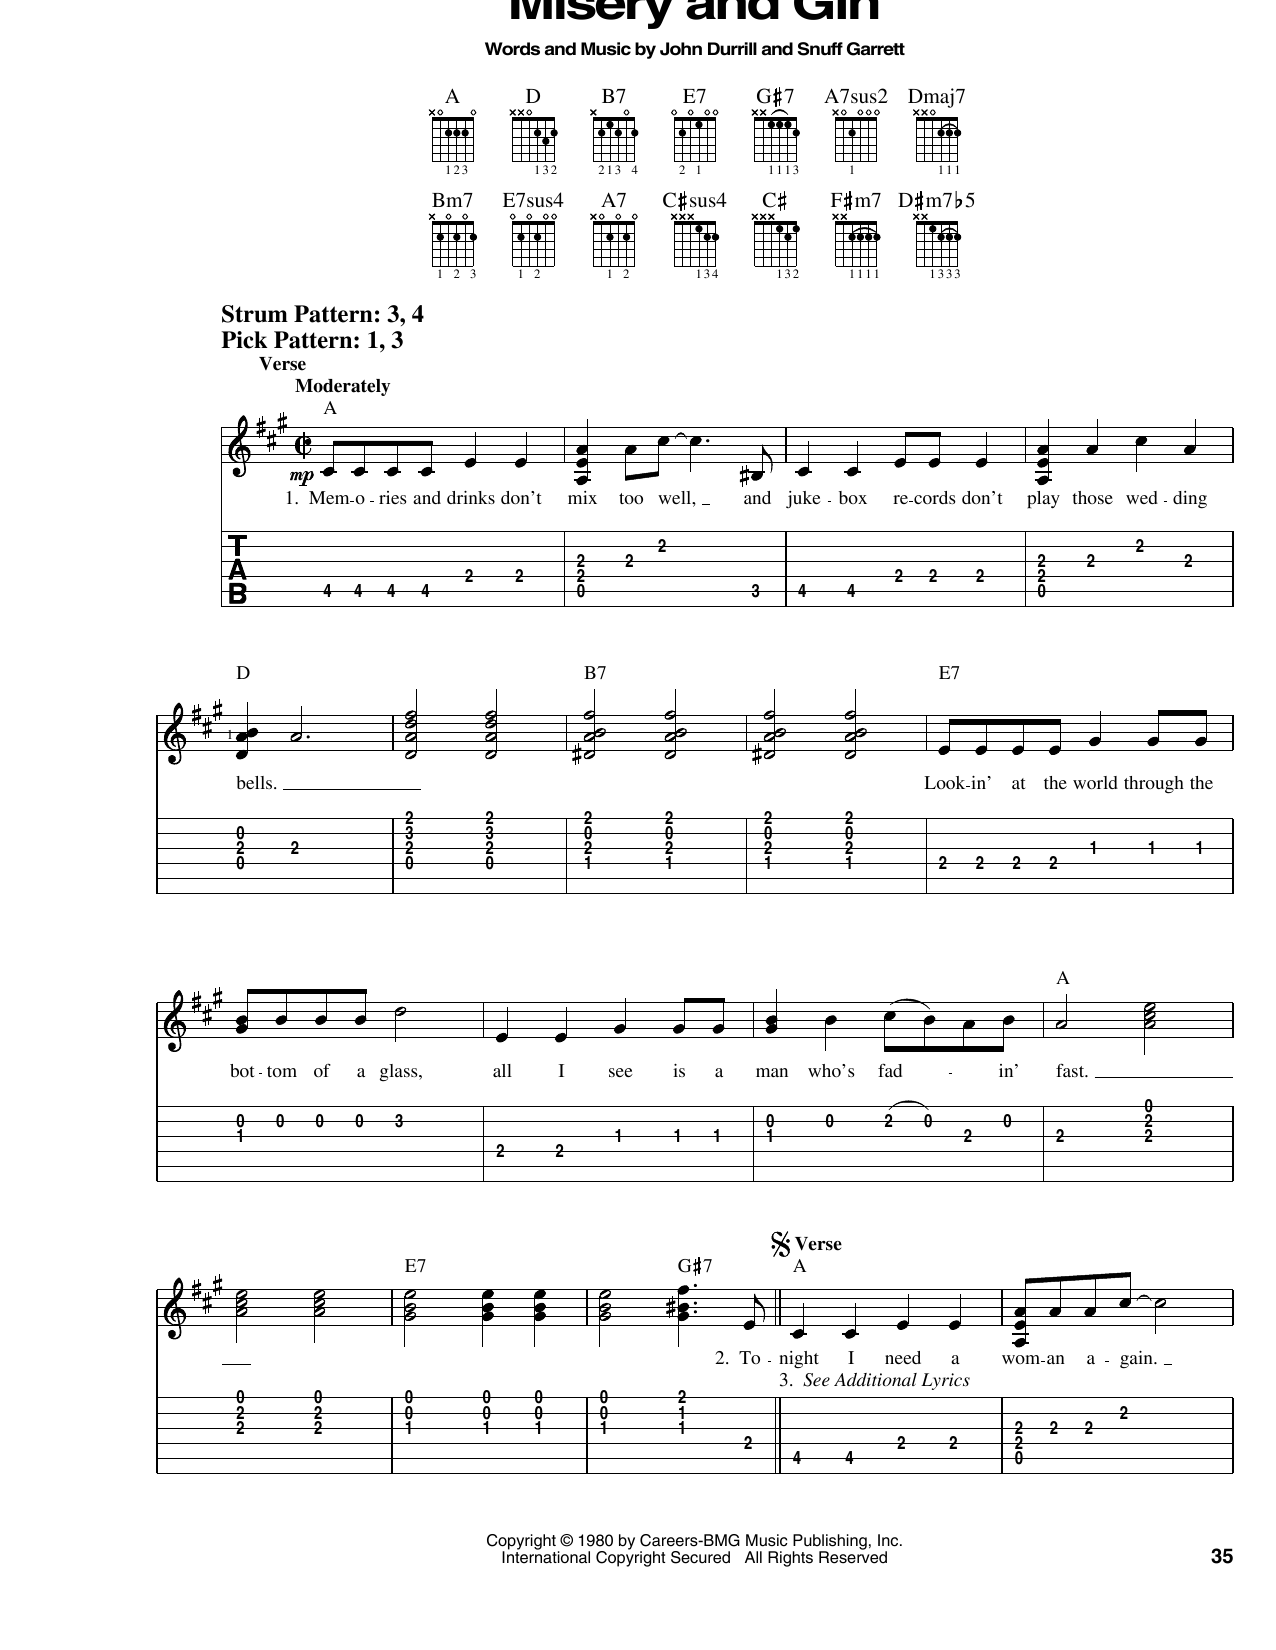 Misery And Gin (Easy Guitar Tab) von Merle Haggard